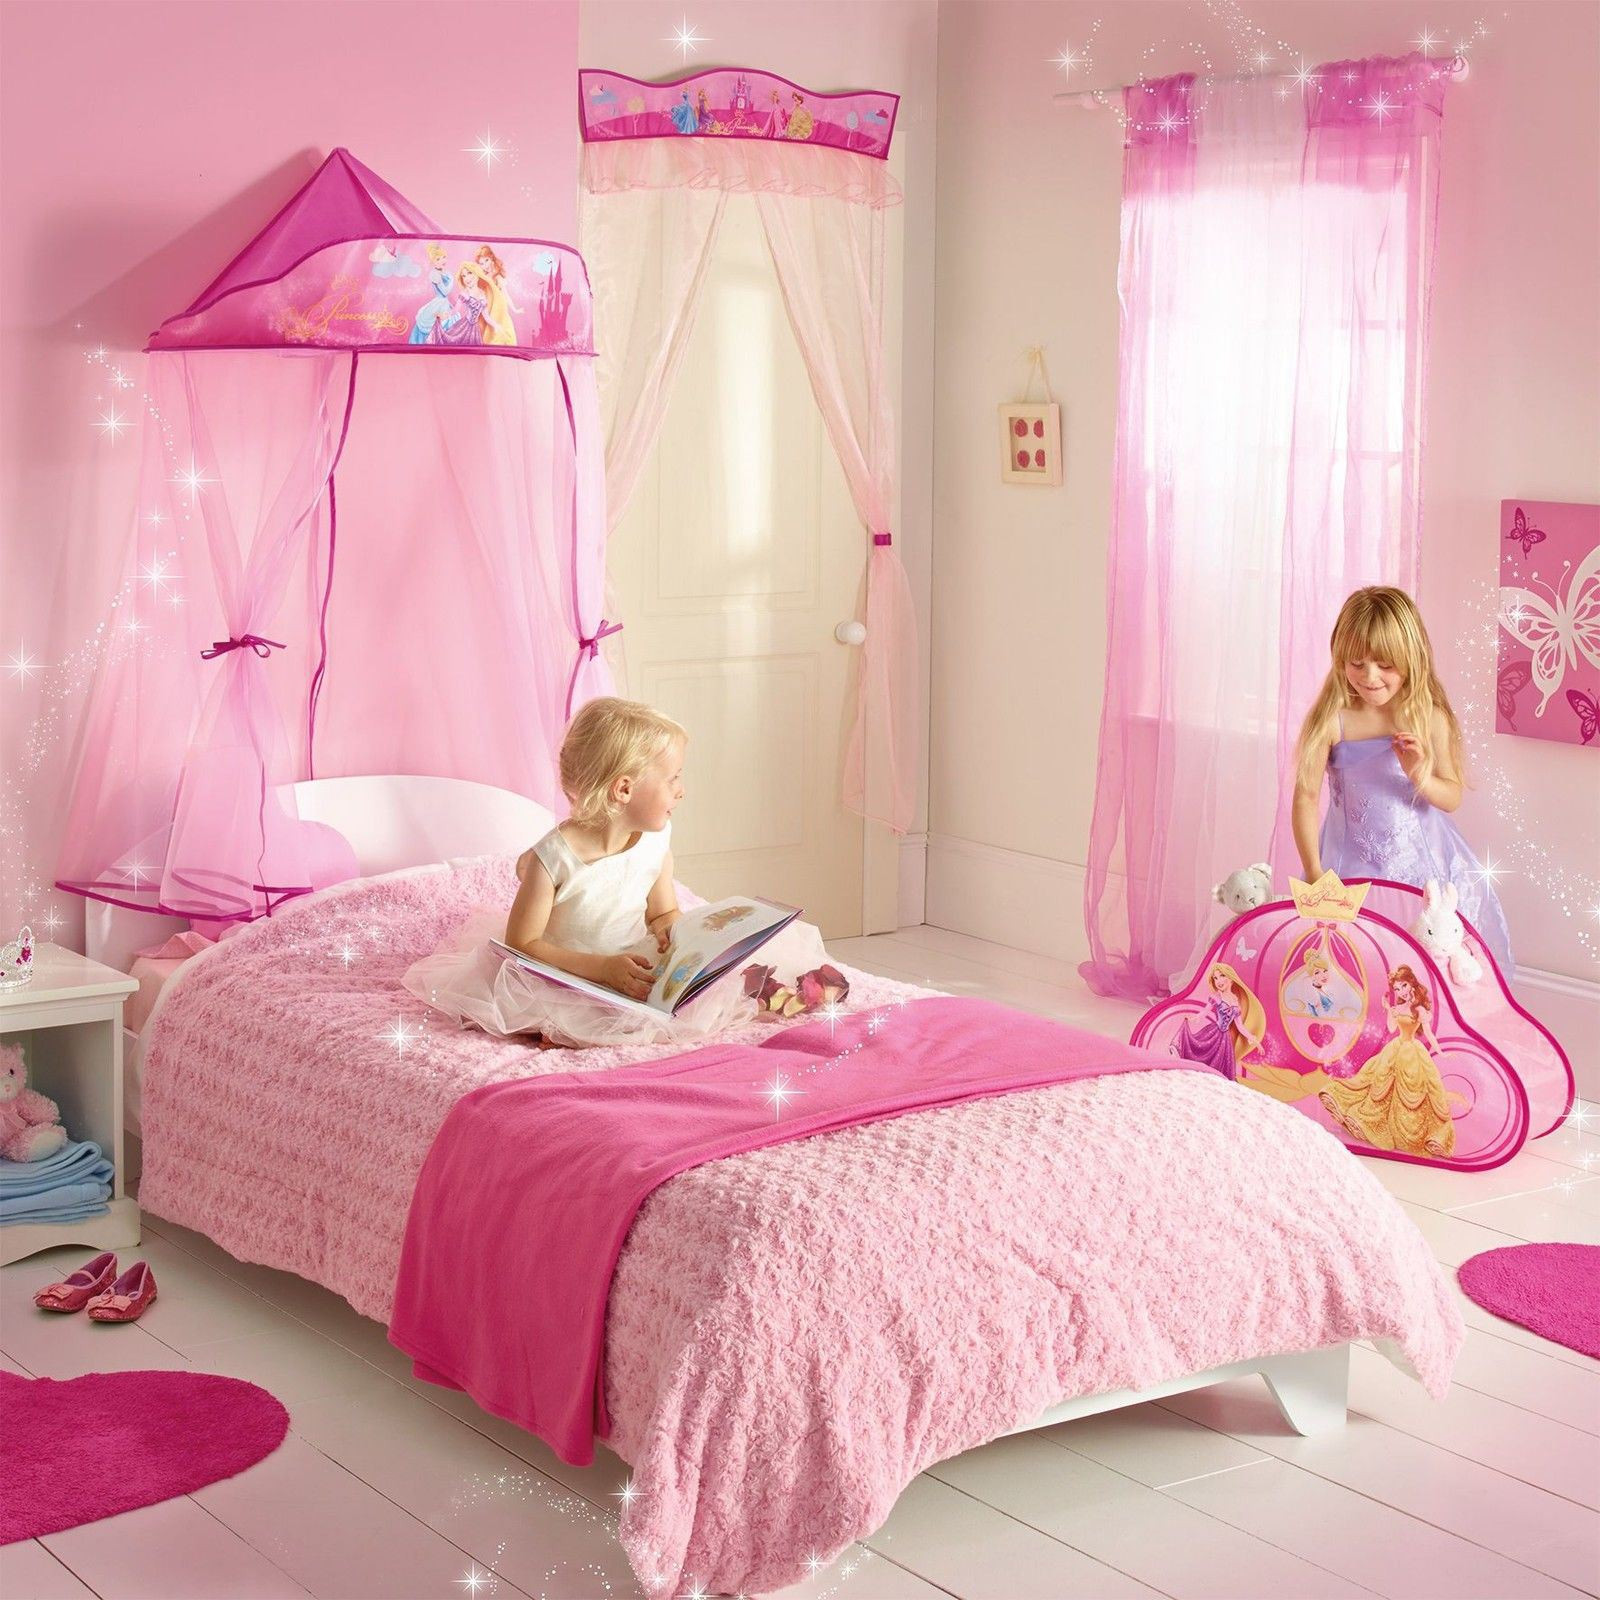 Disney Princess Bedroom Decor
 DISNEY PRINCESS HANGING BED CANOPY NEW GIRLS BEDROOM DECOR